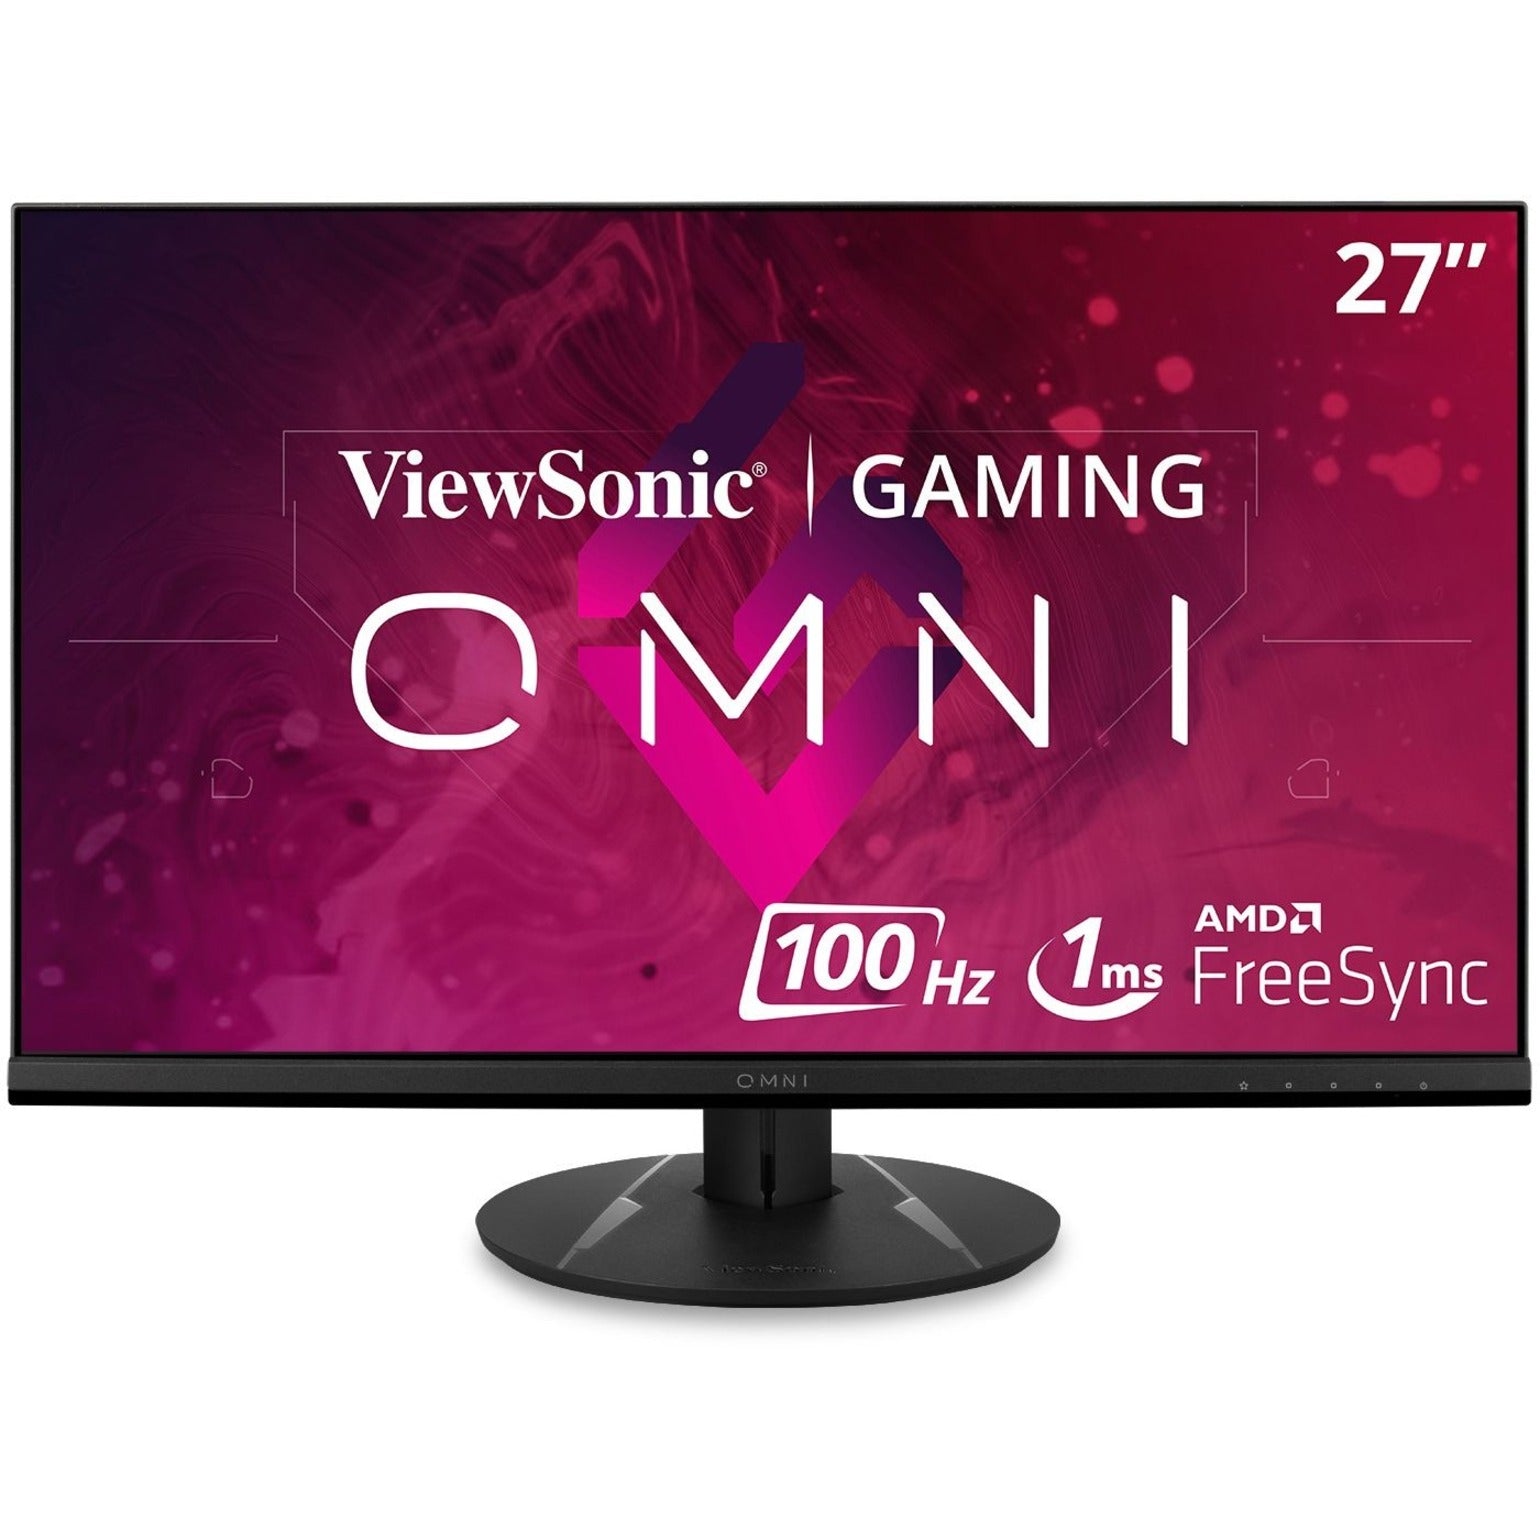 ViewSonic VX2716 27" Gaming Monitor, Full HD, 1ms Response Time, FreeSync